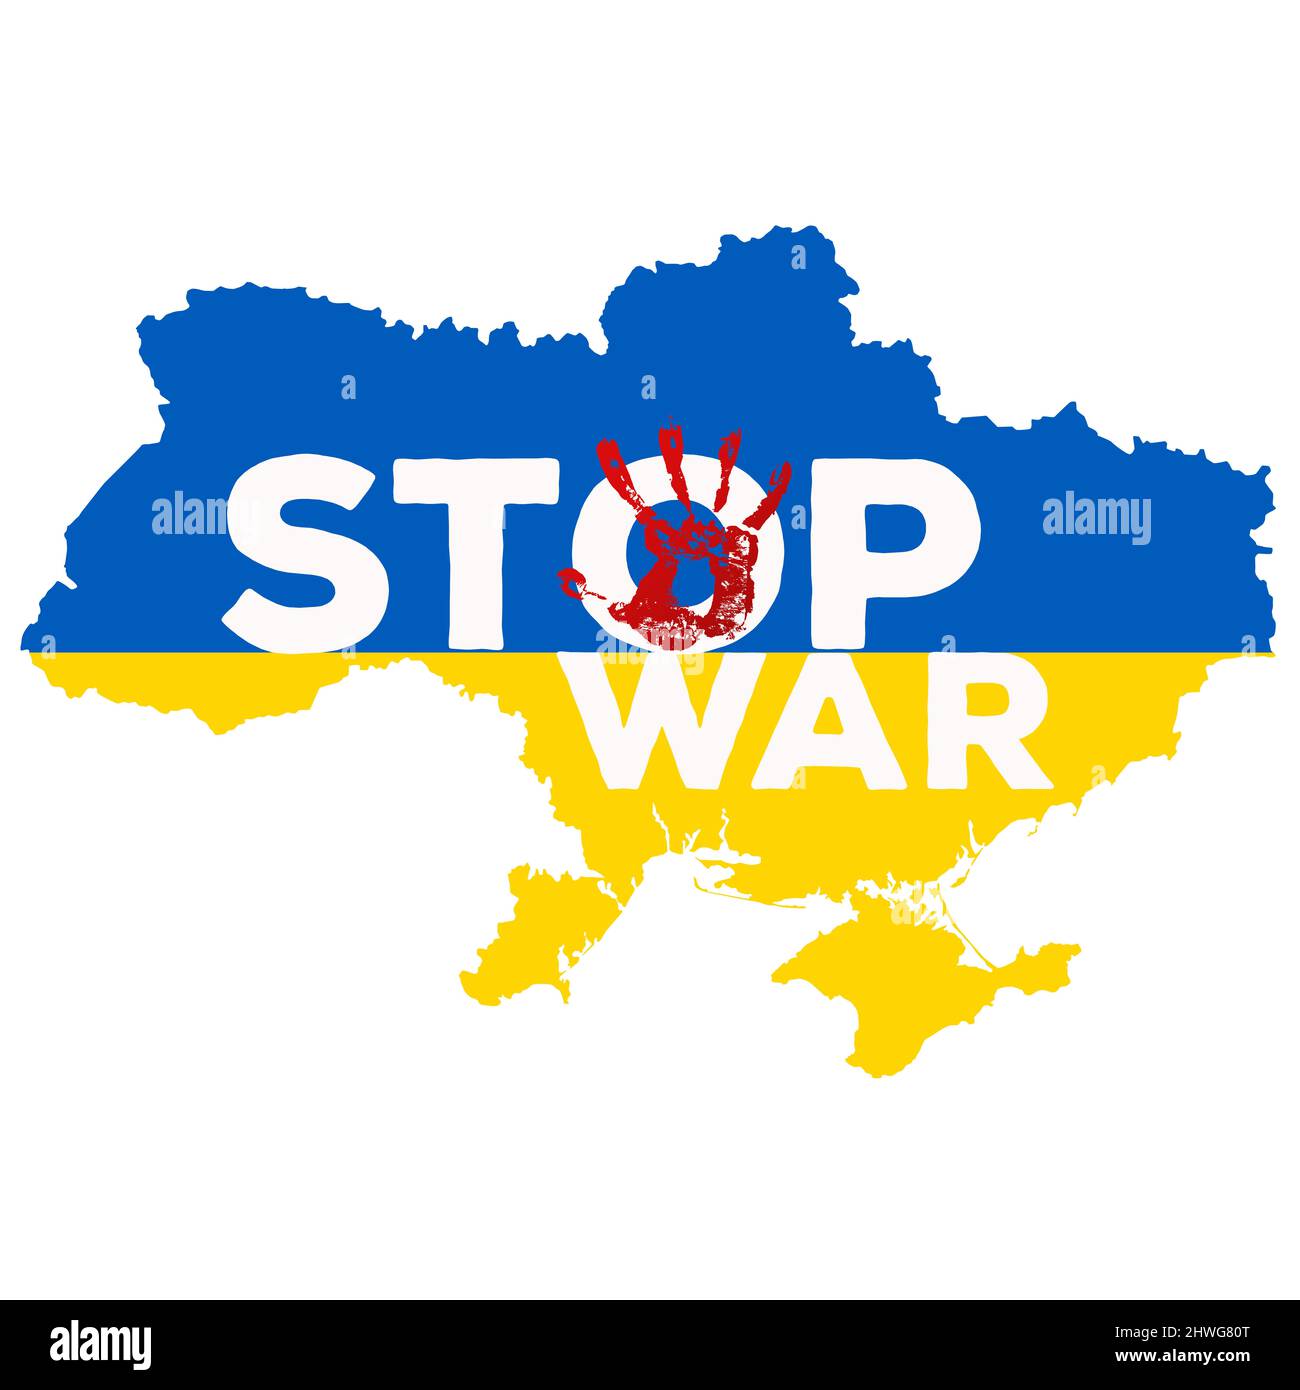 No to War, pro-peace, peace, Vladimir Putin, Ukraine, Ukrainian, war, peace, freedom, love, protest, antiwar, danger, stop, people, military, poster, Stock Photo